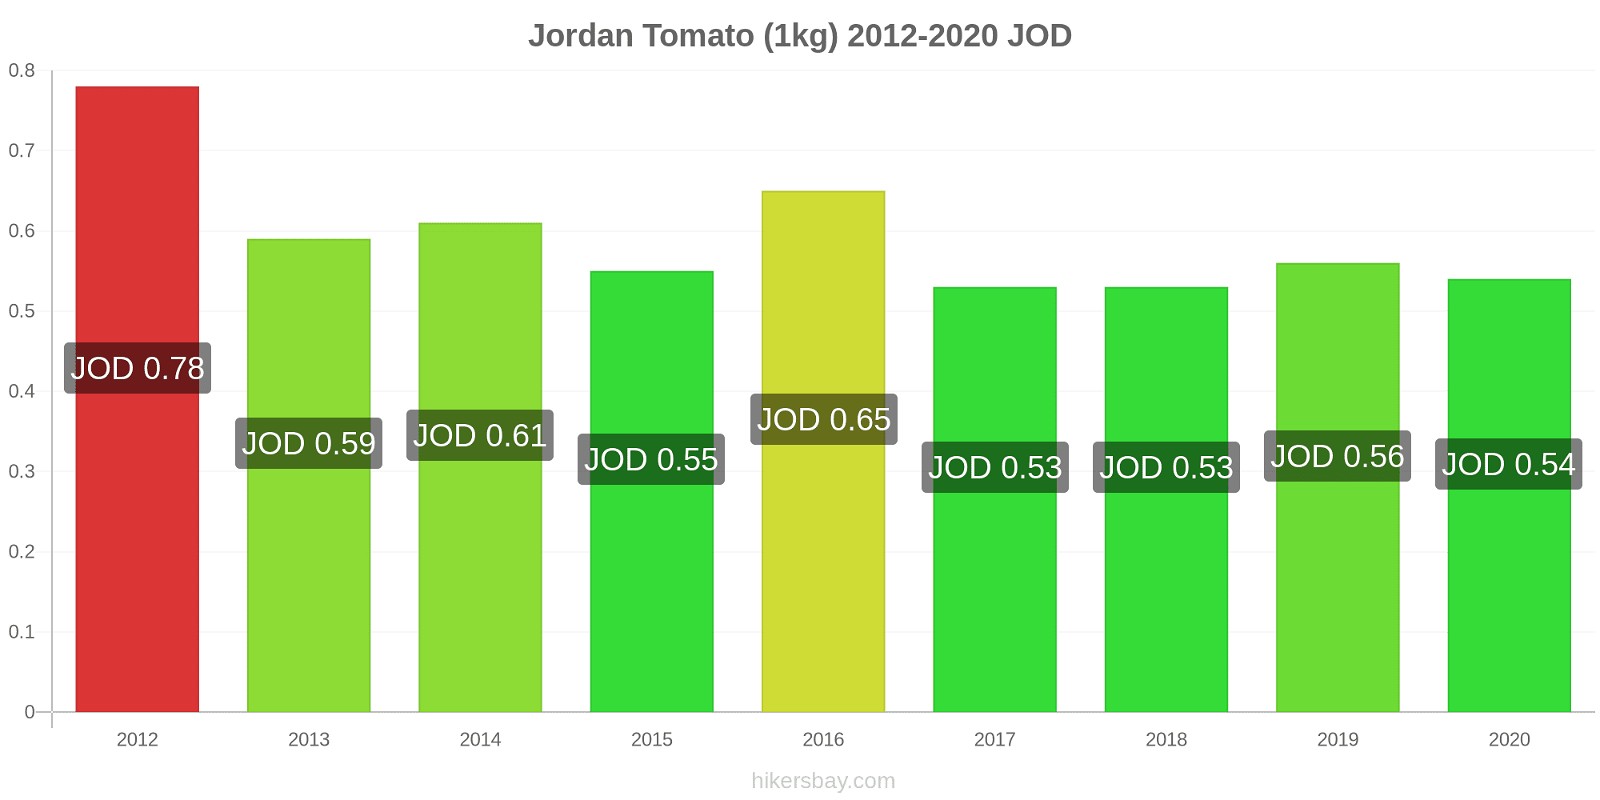 Jordan price changes Tomato (1kg) hikersbay.com